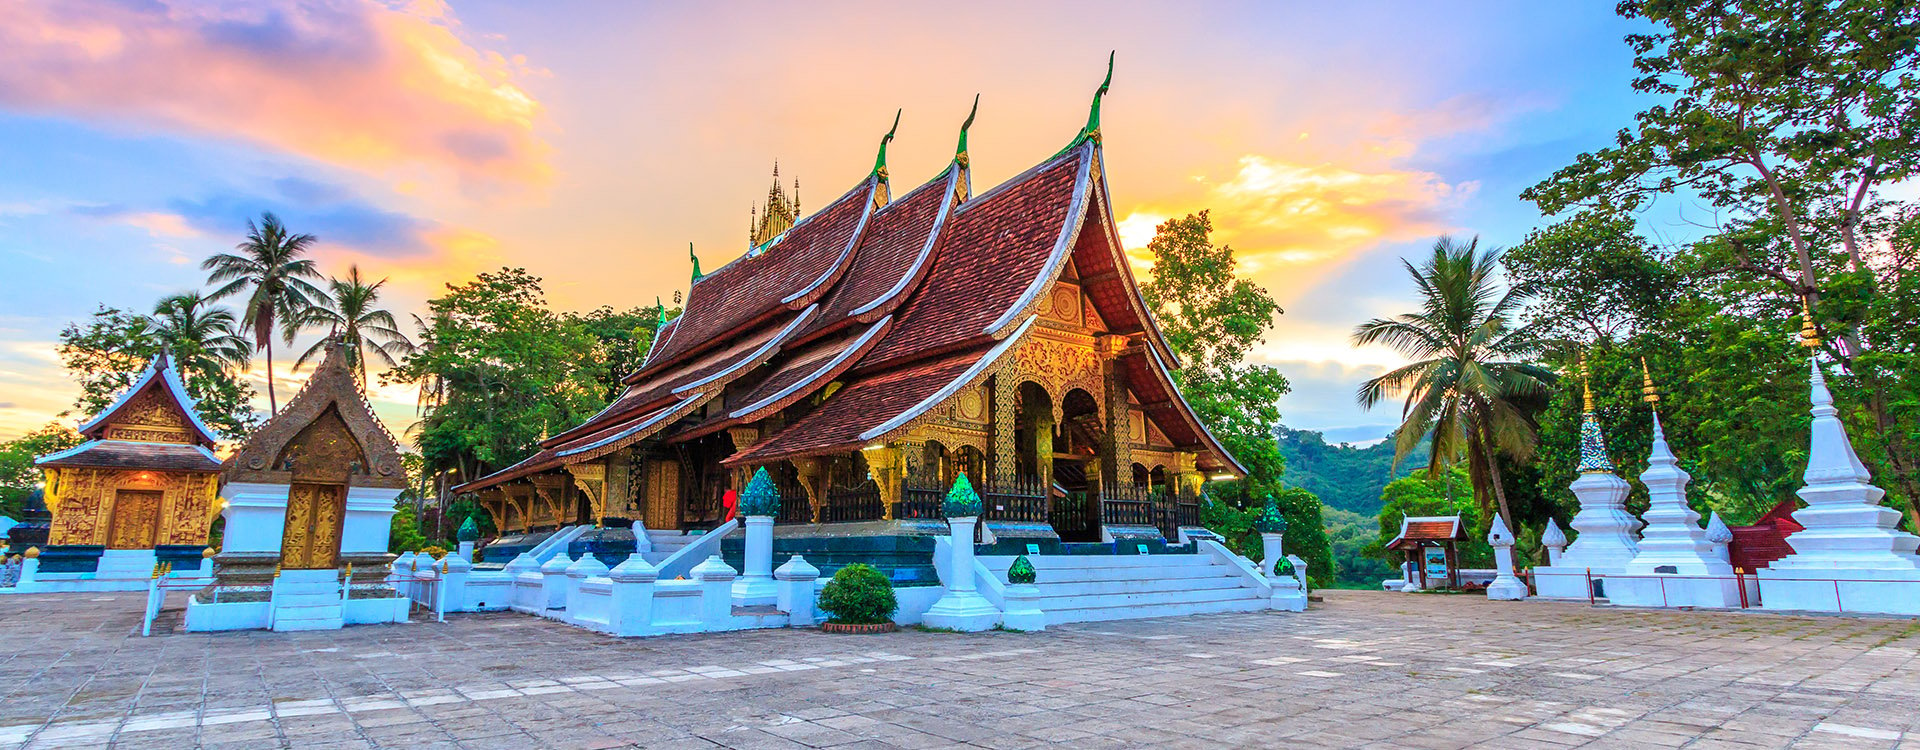 Wat Xieng Thong (Golden City Temple) in Luang Prabang, Laos. Lao monasteries